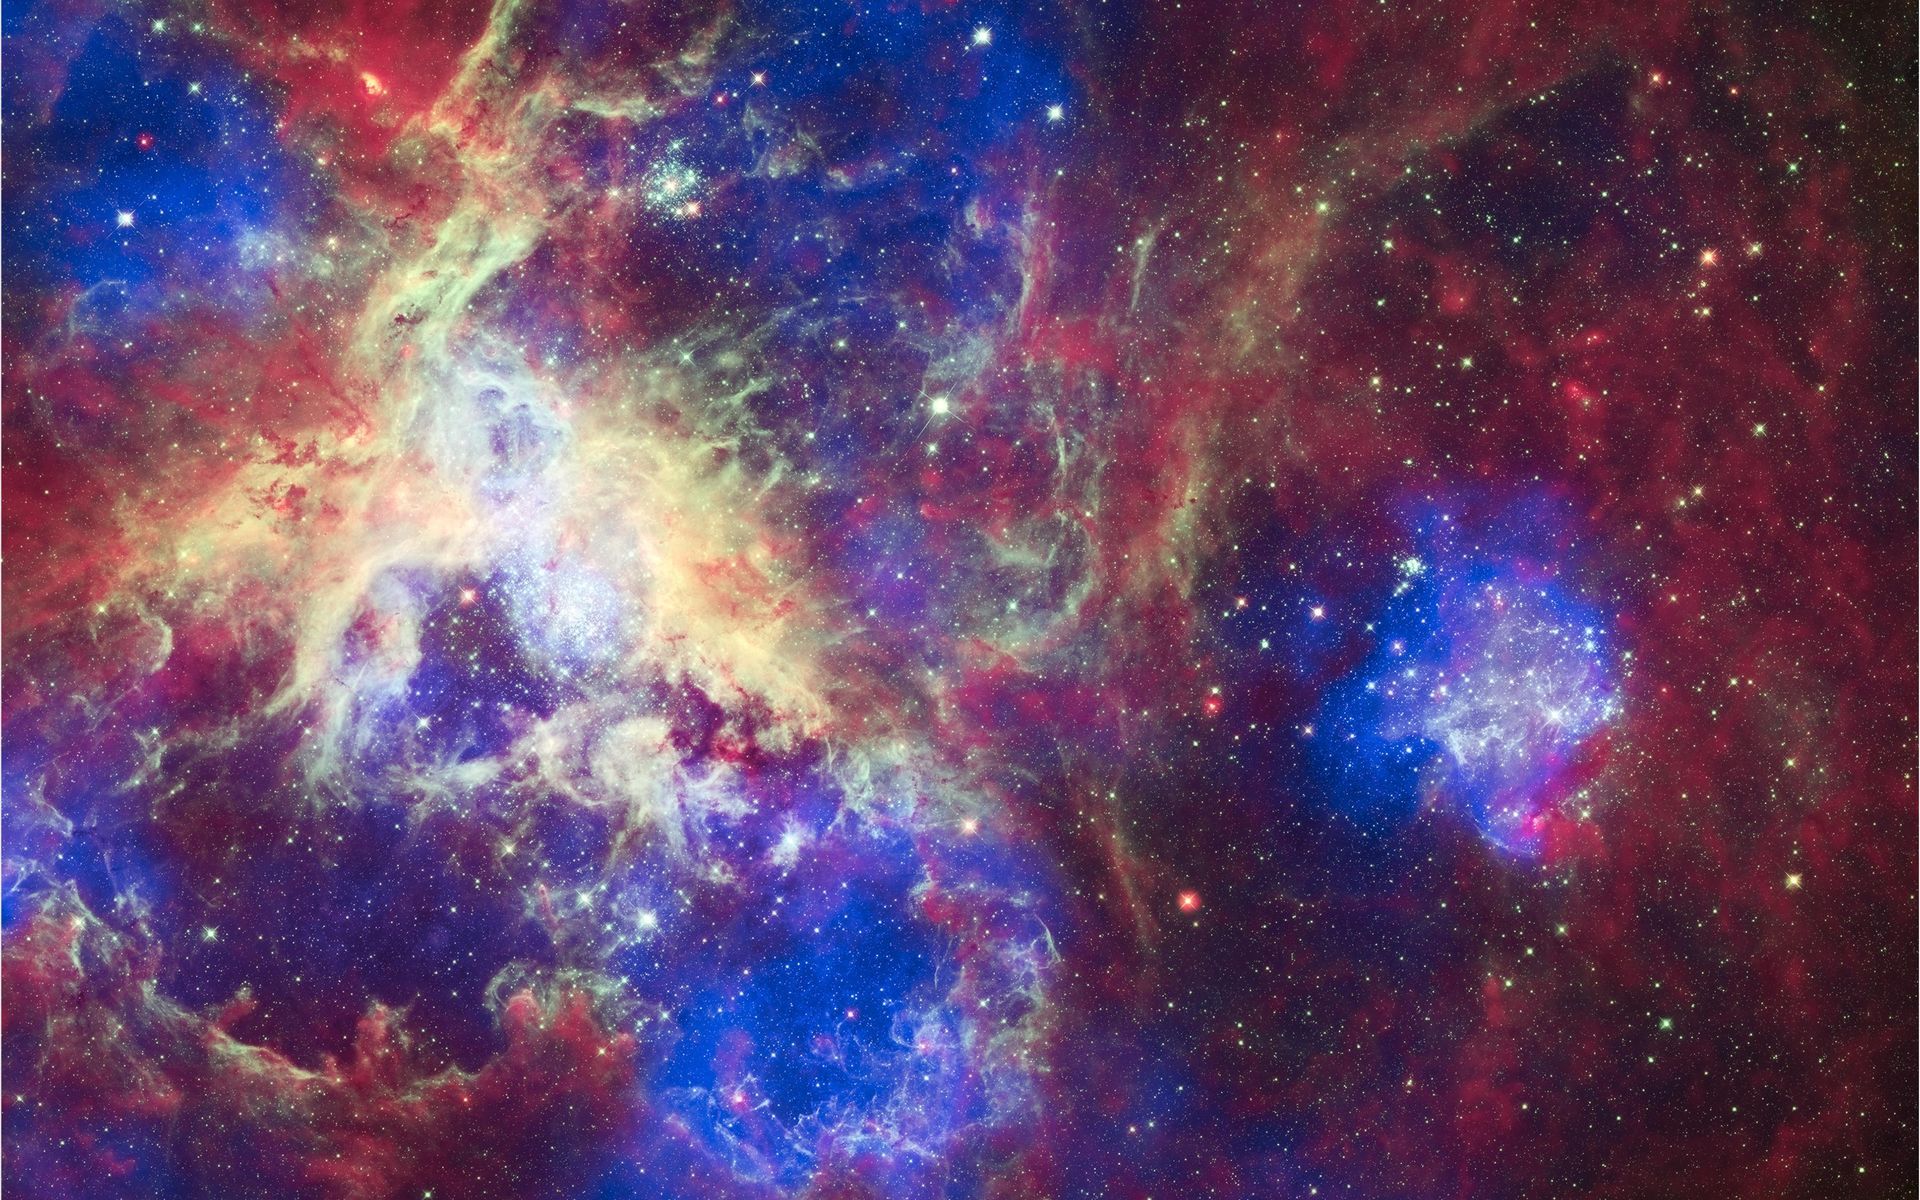 Space Image. A New View of the Tarantula Nebula